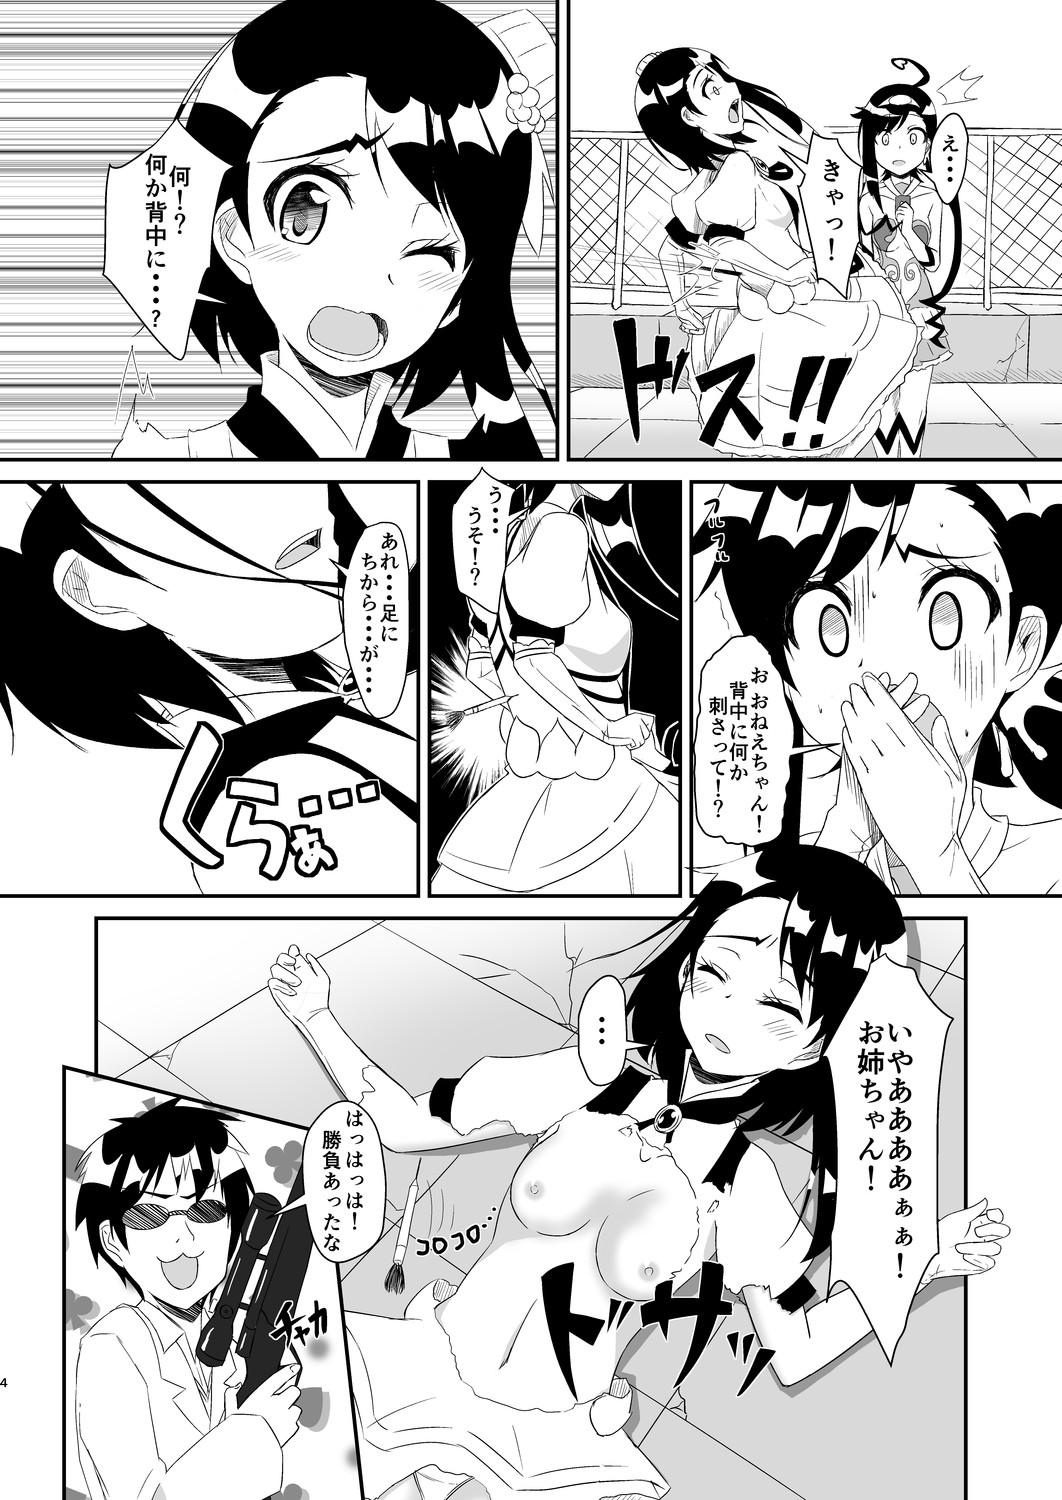 Submissive Futari no MagicParty - Nisekoi Students - Page 3